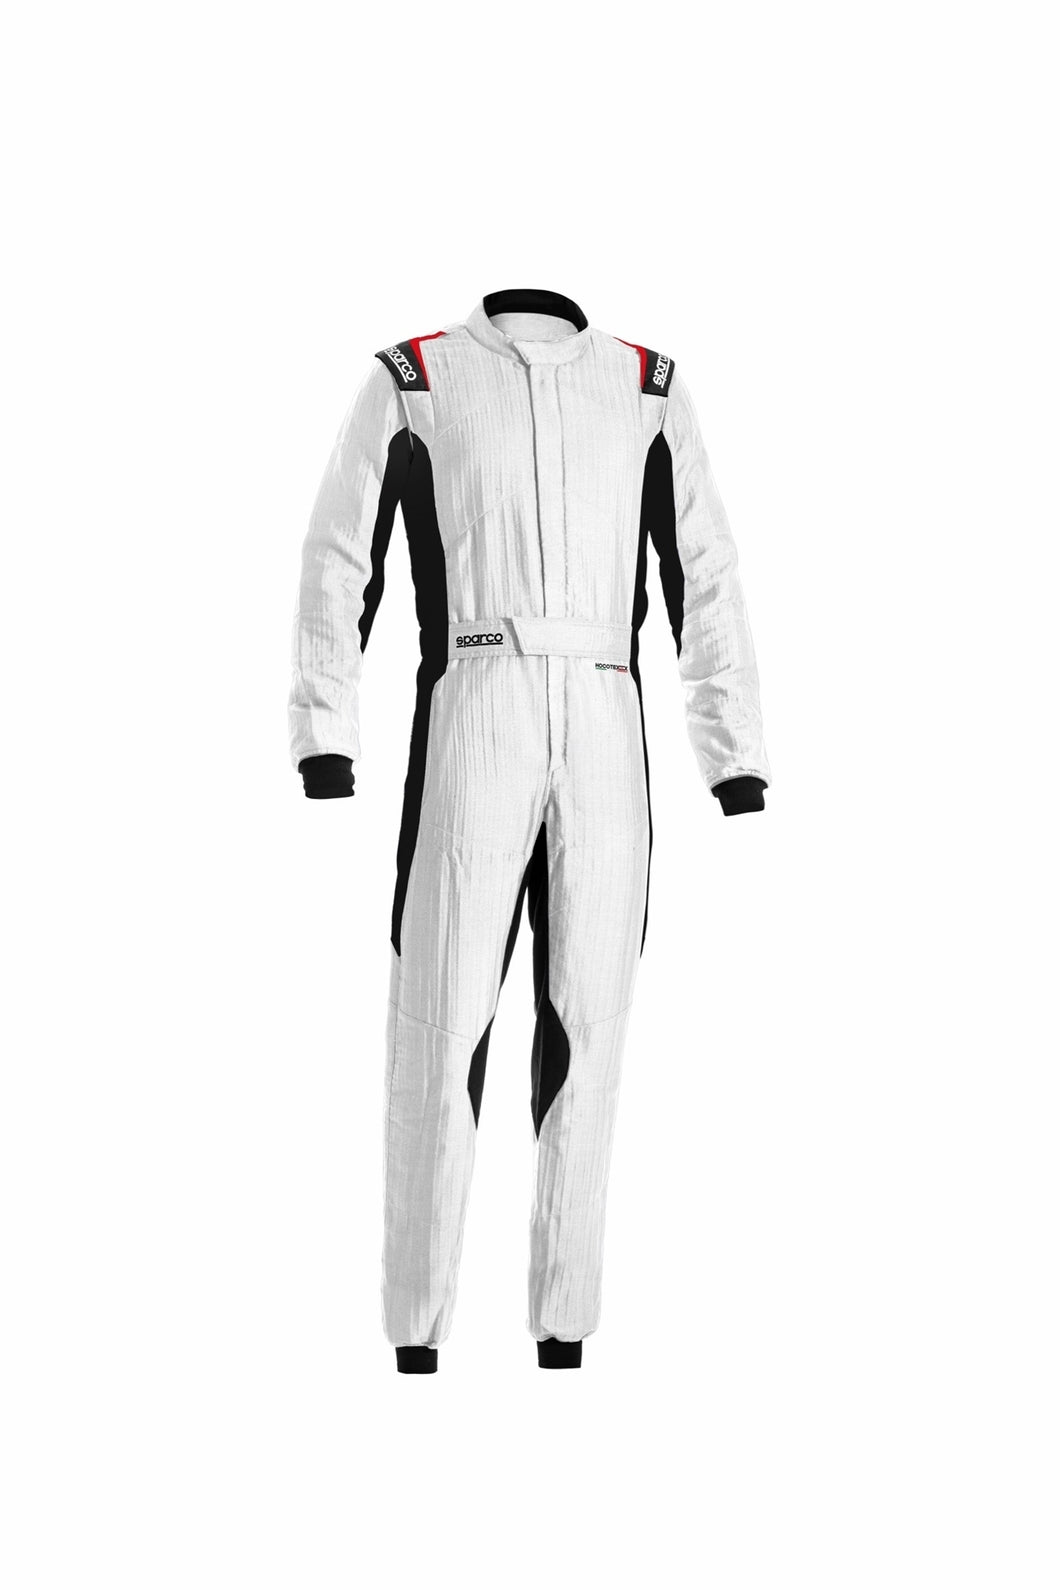 1599.00 SPARCO Eagle 2.0 Racing Fire Suit [FIA 8856-2018 Homologated] Blue/White / White/Black / Black/White / Red/Black - Redline360